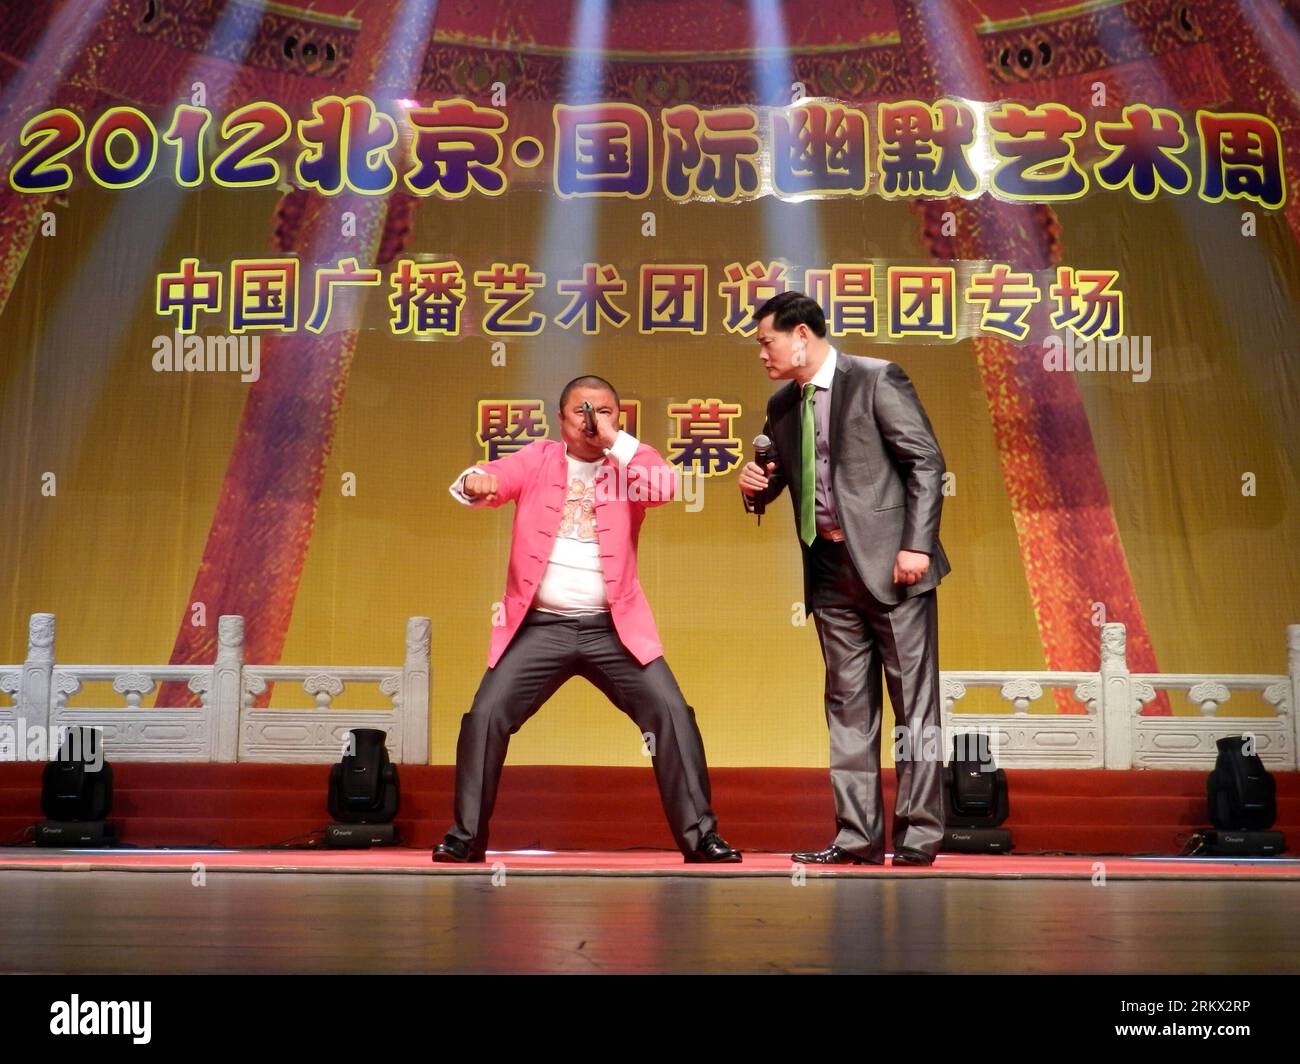 Bildnummer: 58860498  Datum: 01.12.2012  Copyright: imago/Xinhua  CHINA-BEIJING-HUMOUR-FESTIVAL(CN) PUBLICATIONxNOTxINxCHN Entertainment Comedy Comedyshow x0x xac 2012 quer      58860498 Date 01 12 2012 Copyright Imago XINHUA China Beijing Humor Festival CN PUBLICATIONxNOTxINxCHN Entertainment Comedy Comedy Show x0x  2012 horizontal Stock Photo